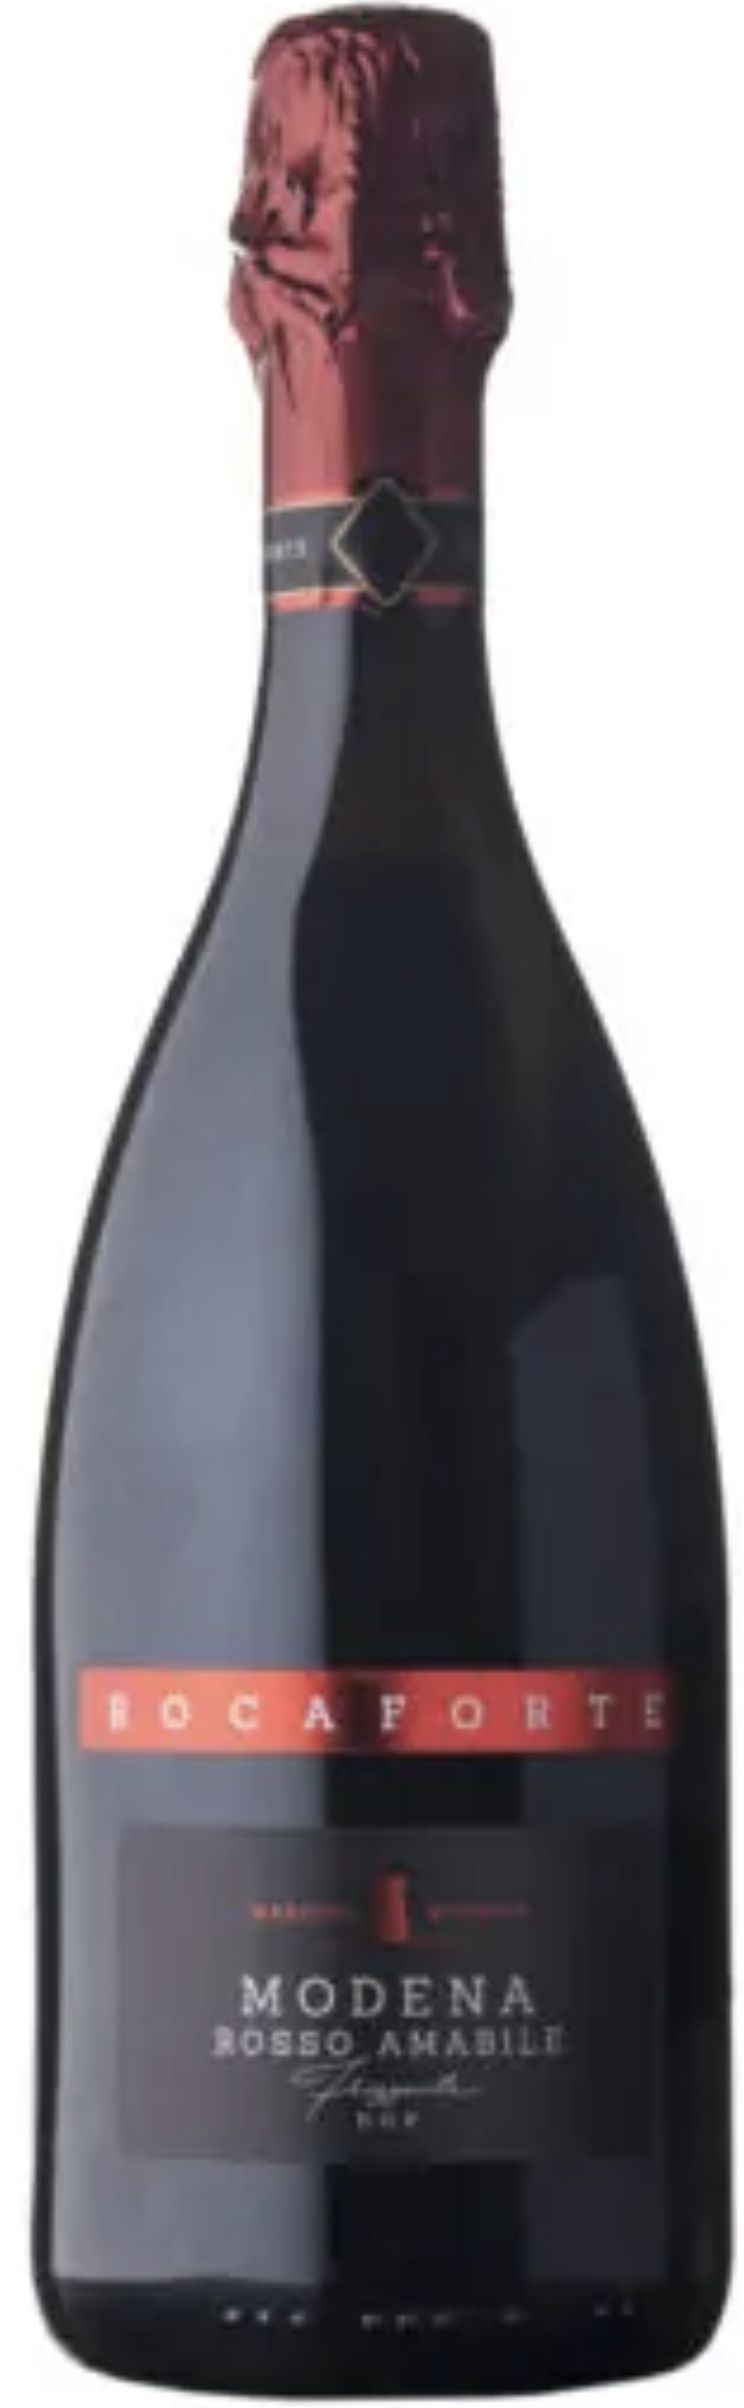 Игристое вино Рокафорте Модена Россо Амабиле, красное полусладкое, 0.75 л